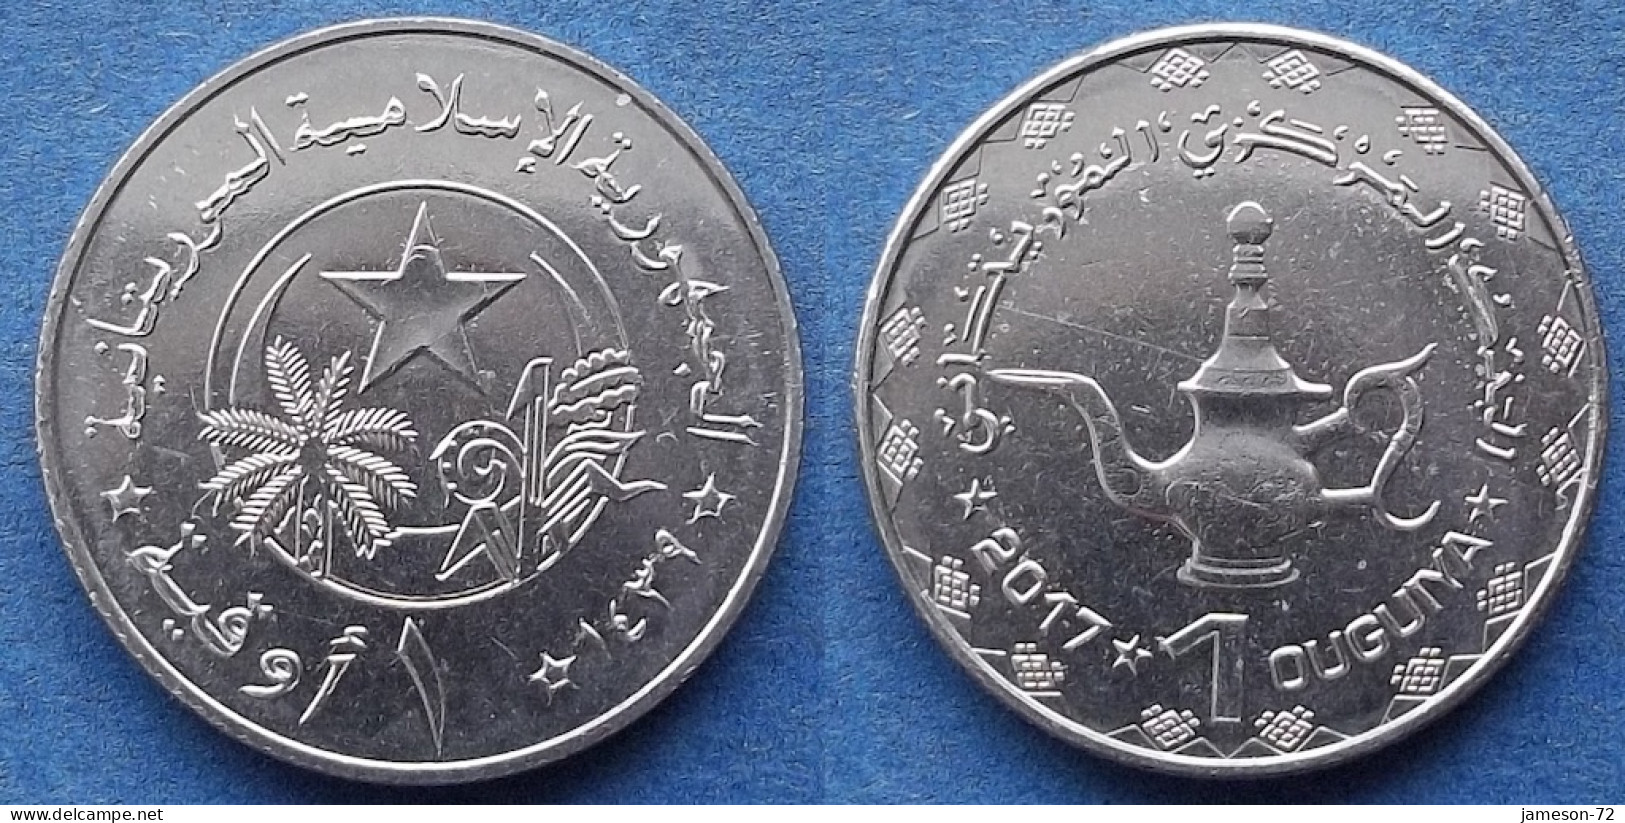 MAURITANIA - 1 Ouguiya AH1439 2017AD "Teapot" KM# 12 Independent Republic (1960) - Edelweiss Coins - Mauritania